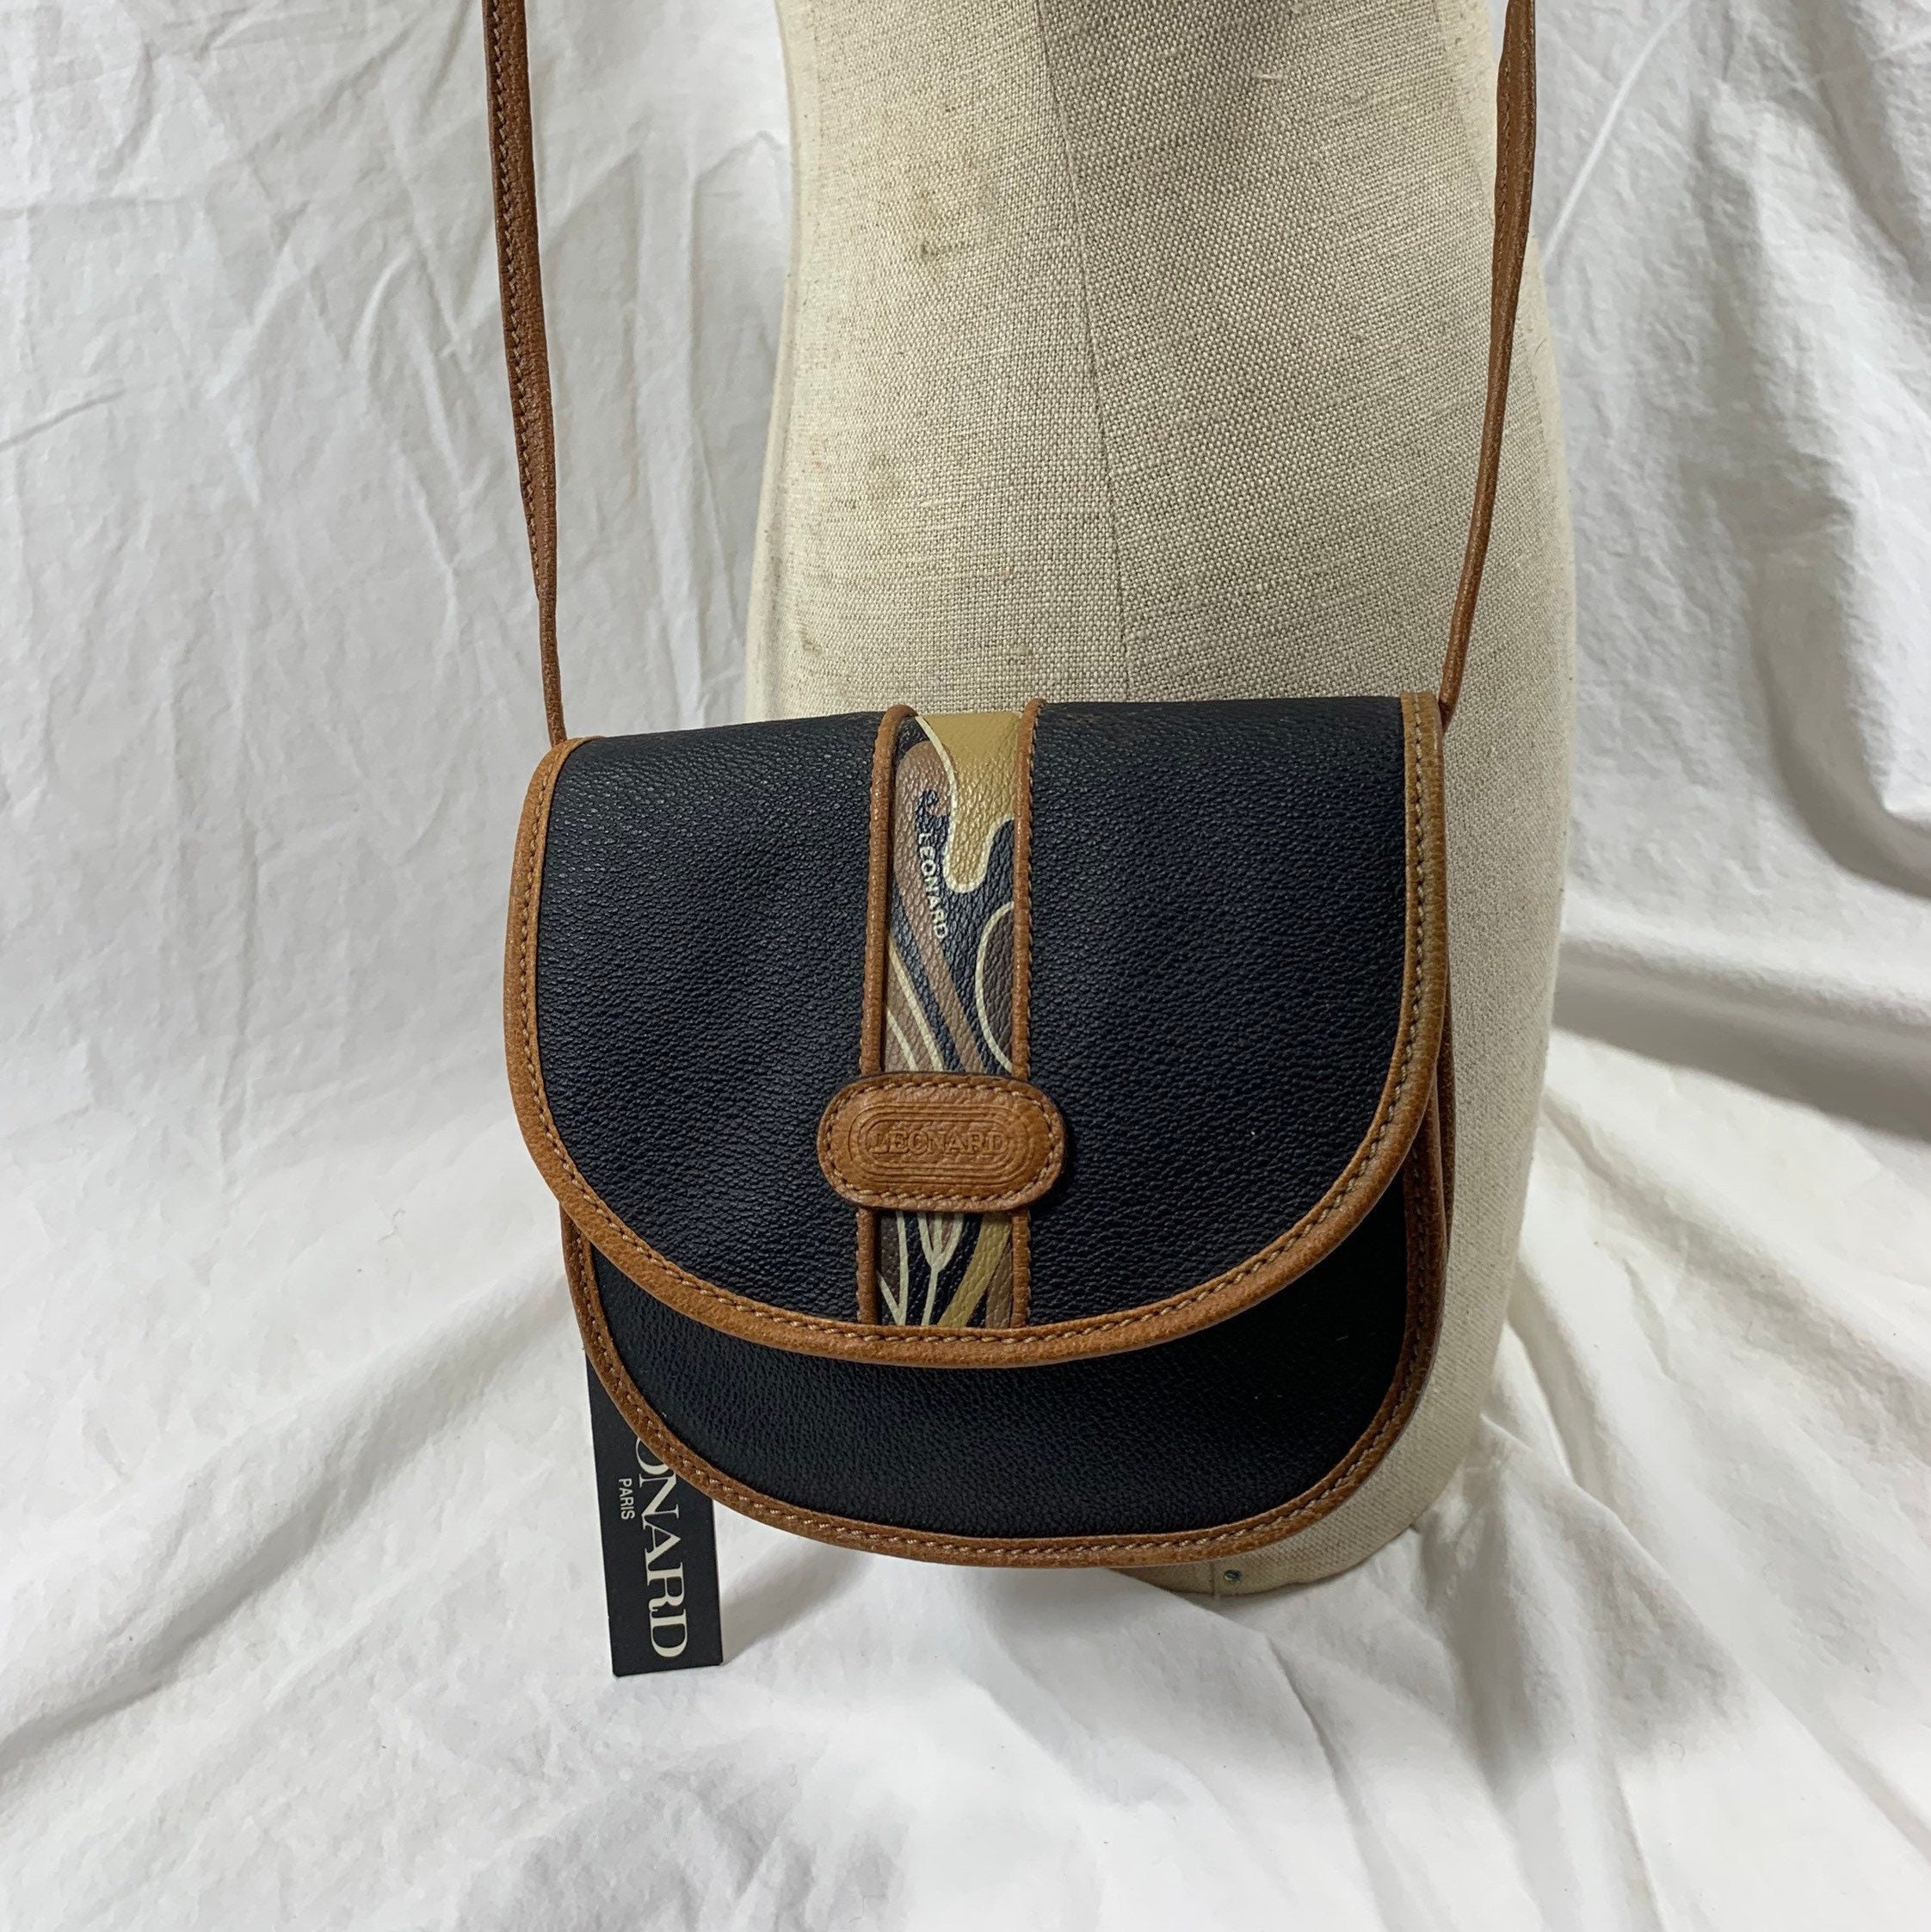 Leonard Neutrals Leather Trim Coated Canvas Bucket Bag